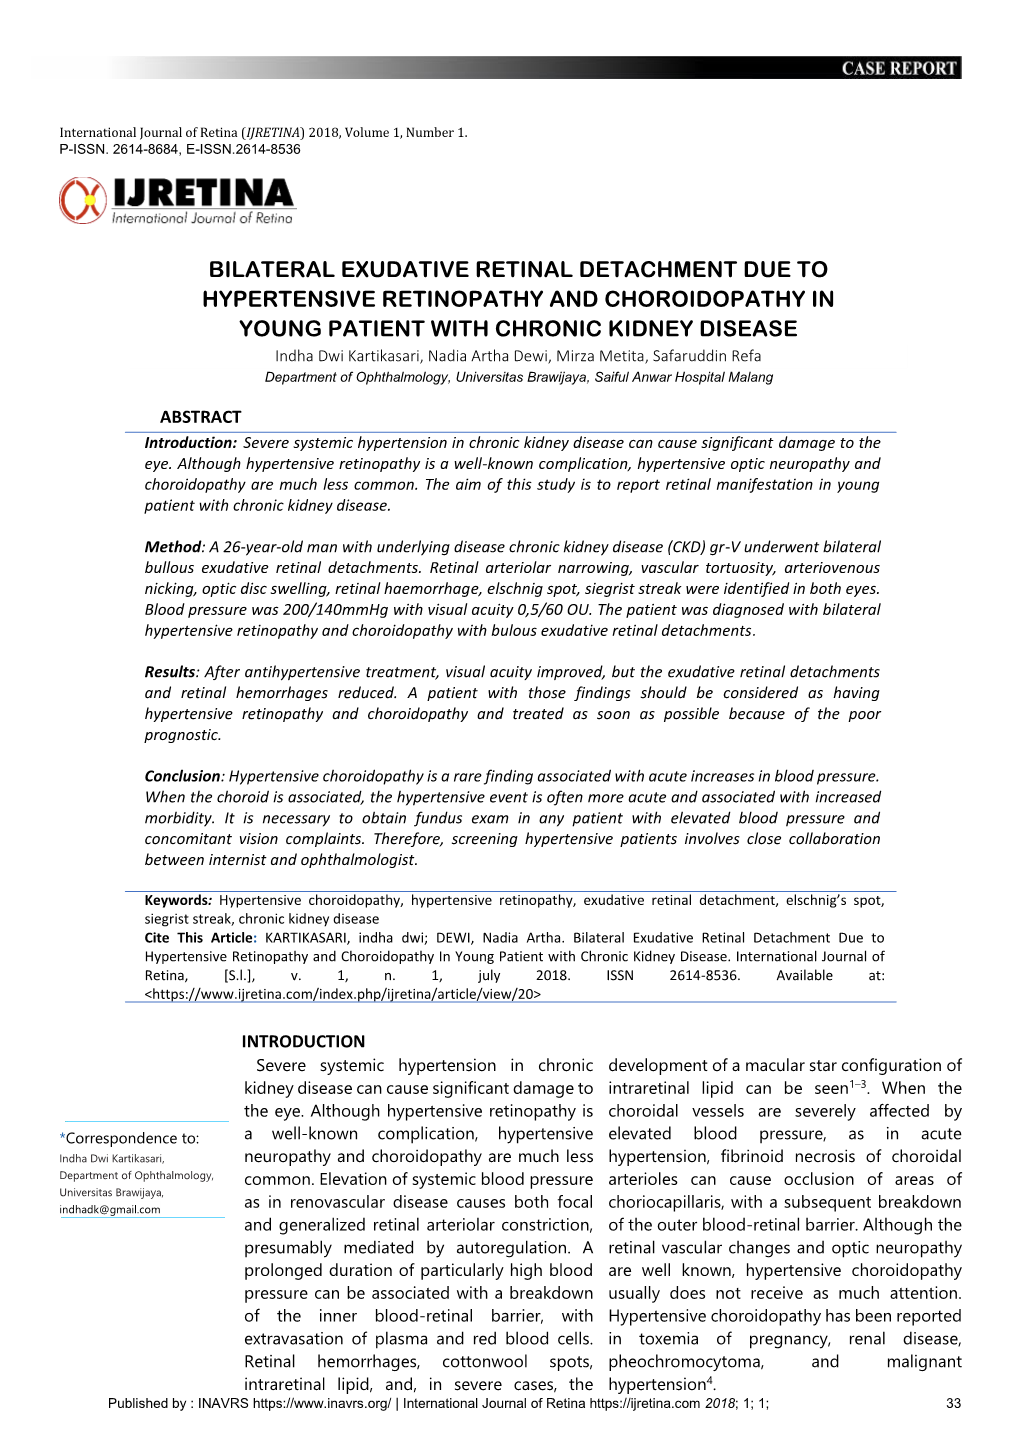 Bilateral Exudative Retinal Detachment Due to Hypertensive Retinopathy And